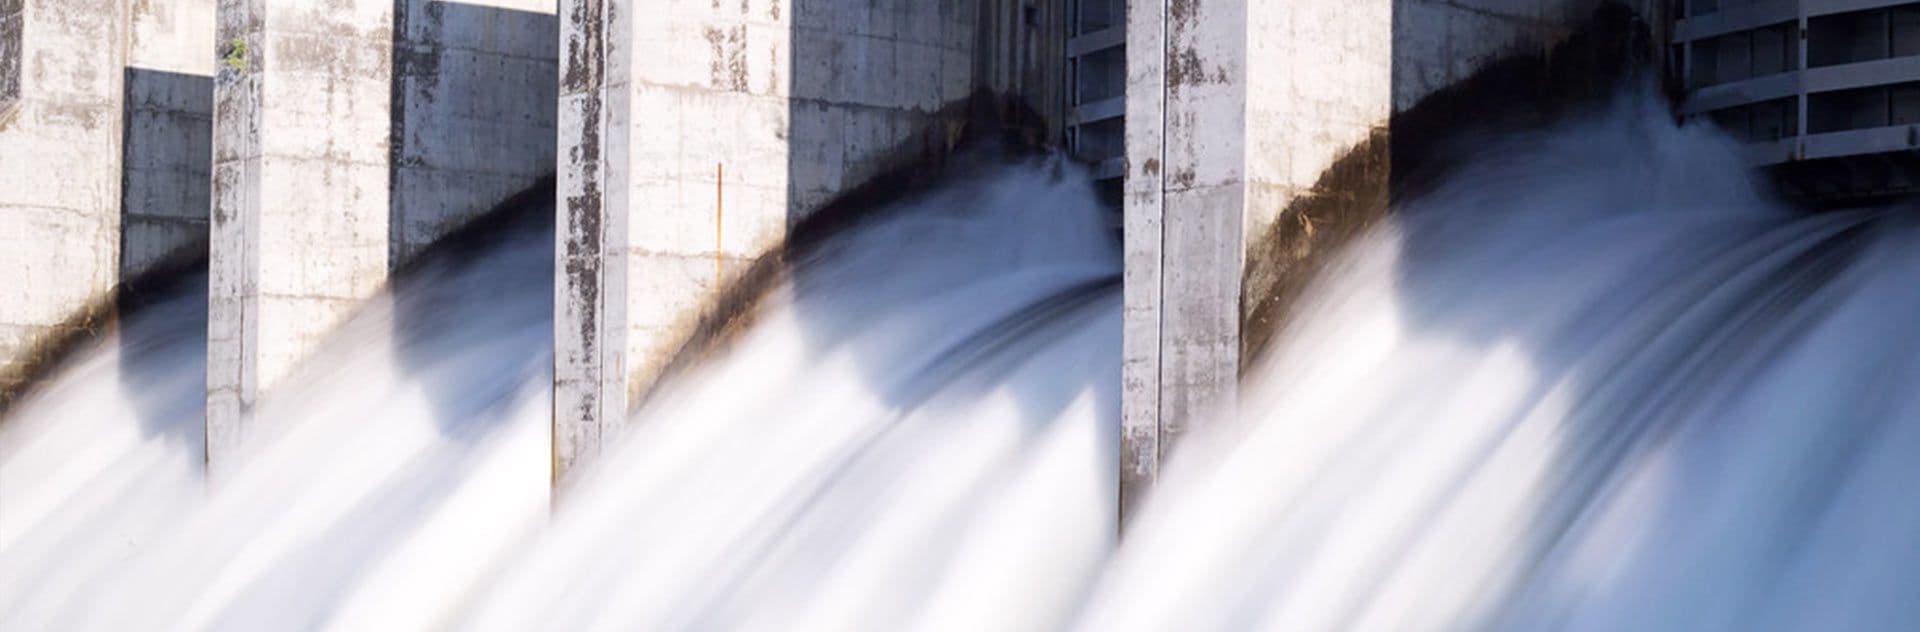 Dam Monitoring with TerraSAR-X InSAR Analysis - Hydroelectric dam